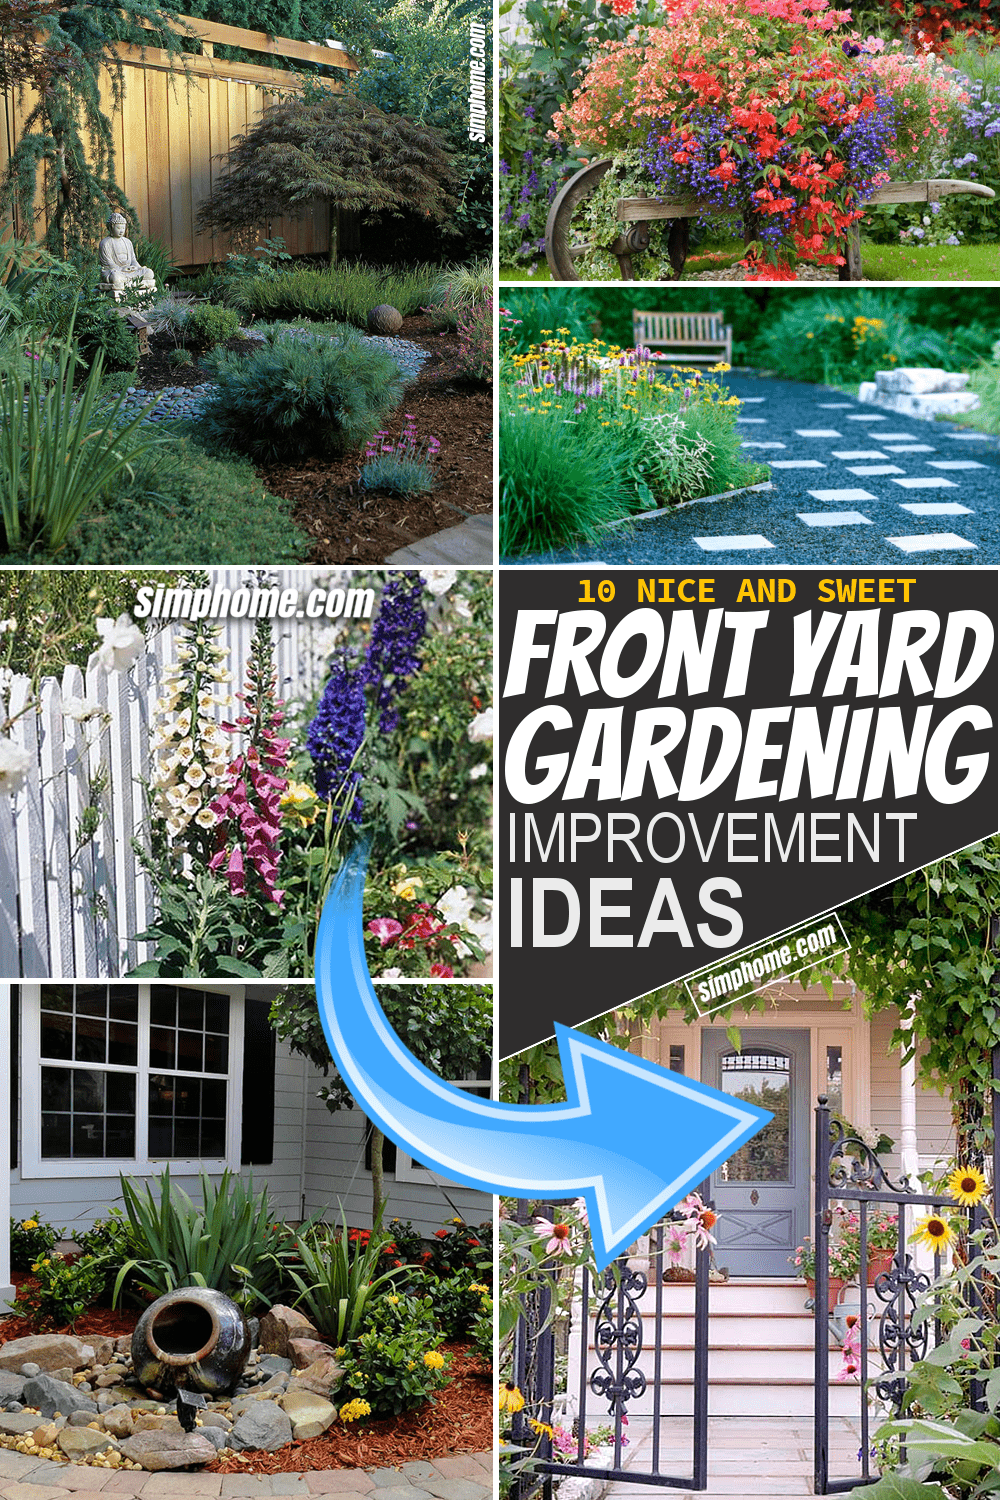 Simphome.com 10 Front Yard Gardening Ideas Pinterest image Long